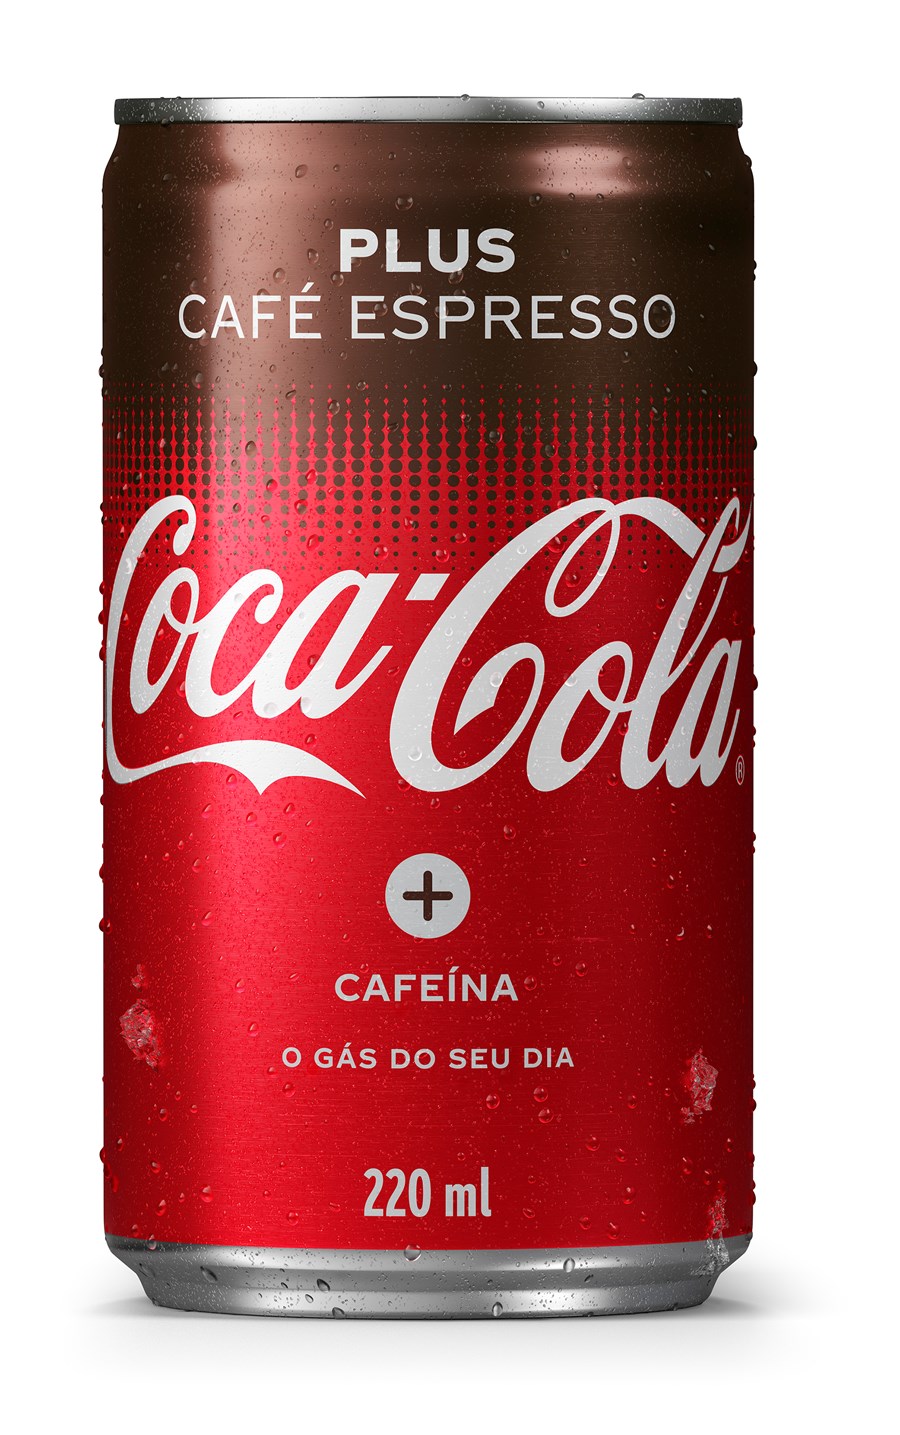 https://www.infomoney.com.br/wp-content/uploads/2019/06/coca-cola-plus-cafe-espresso.jpg?fit=900%2C1435&quality=50&strip=all